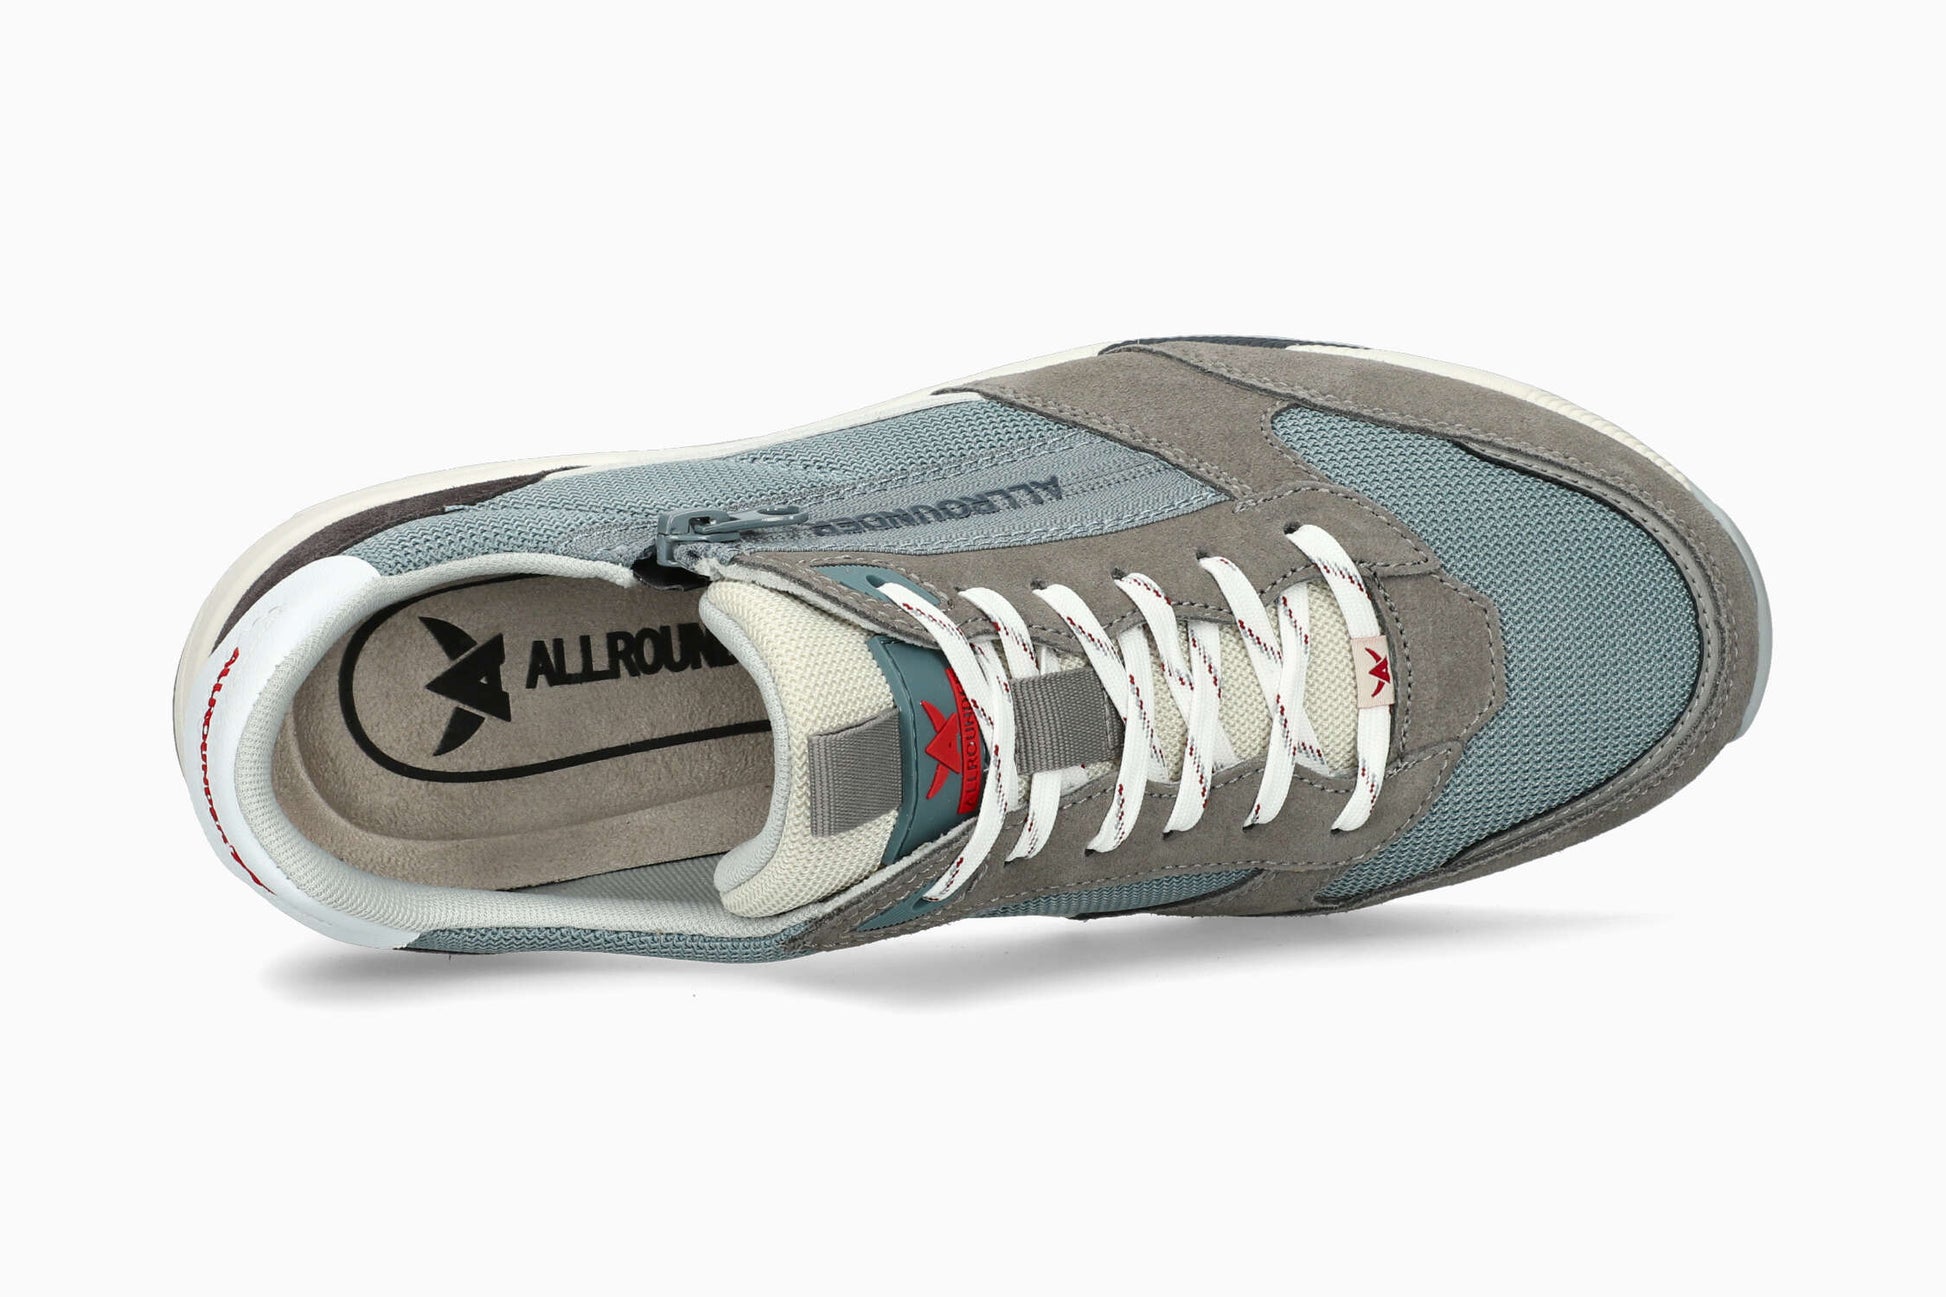 Allrounder Scarmaro Warm Grey Men's Sneaker Top